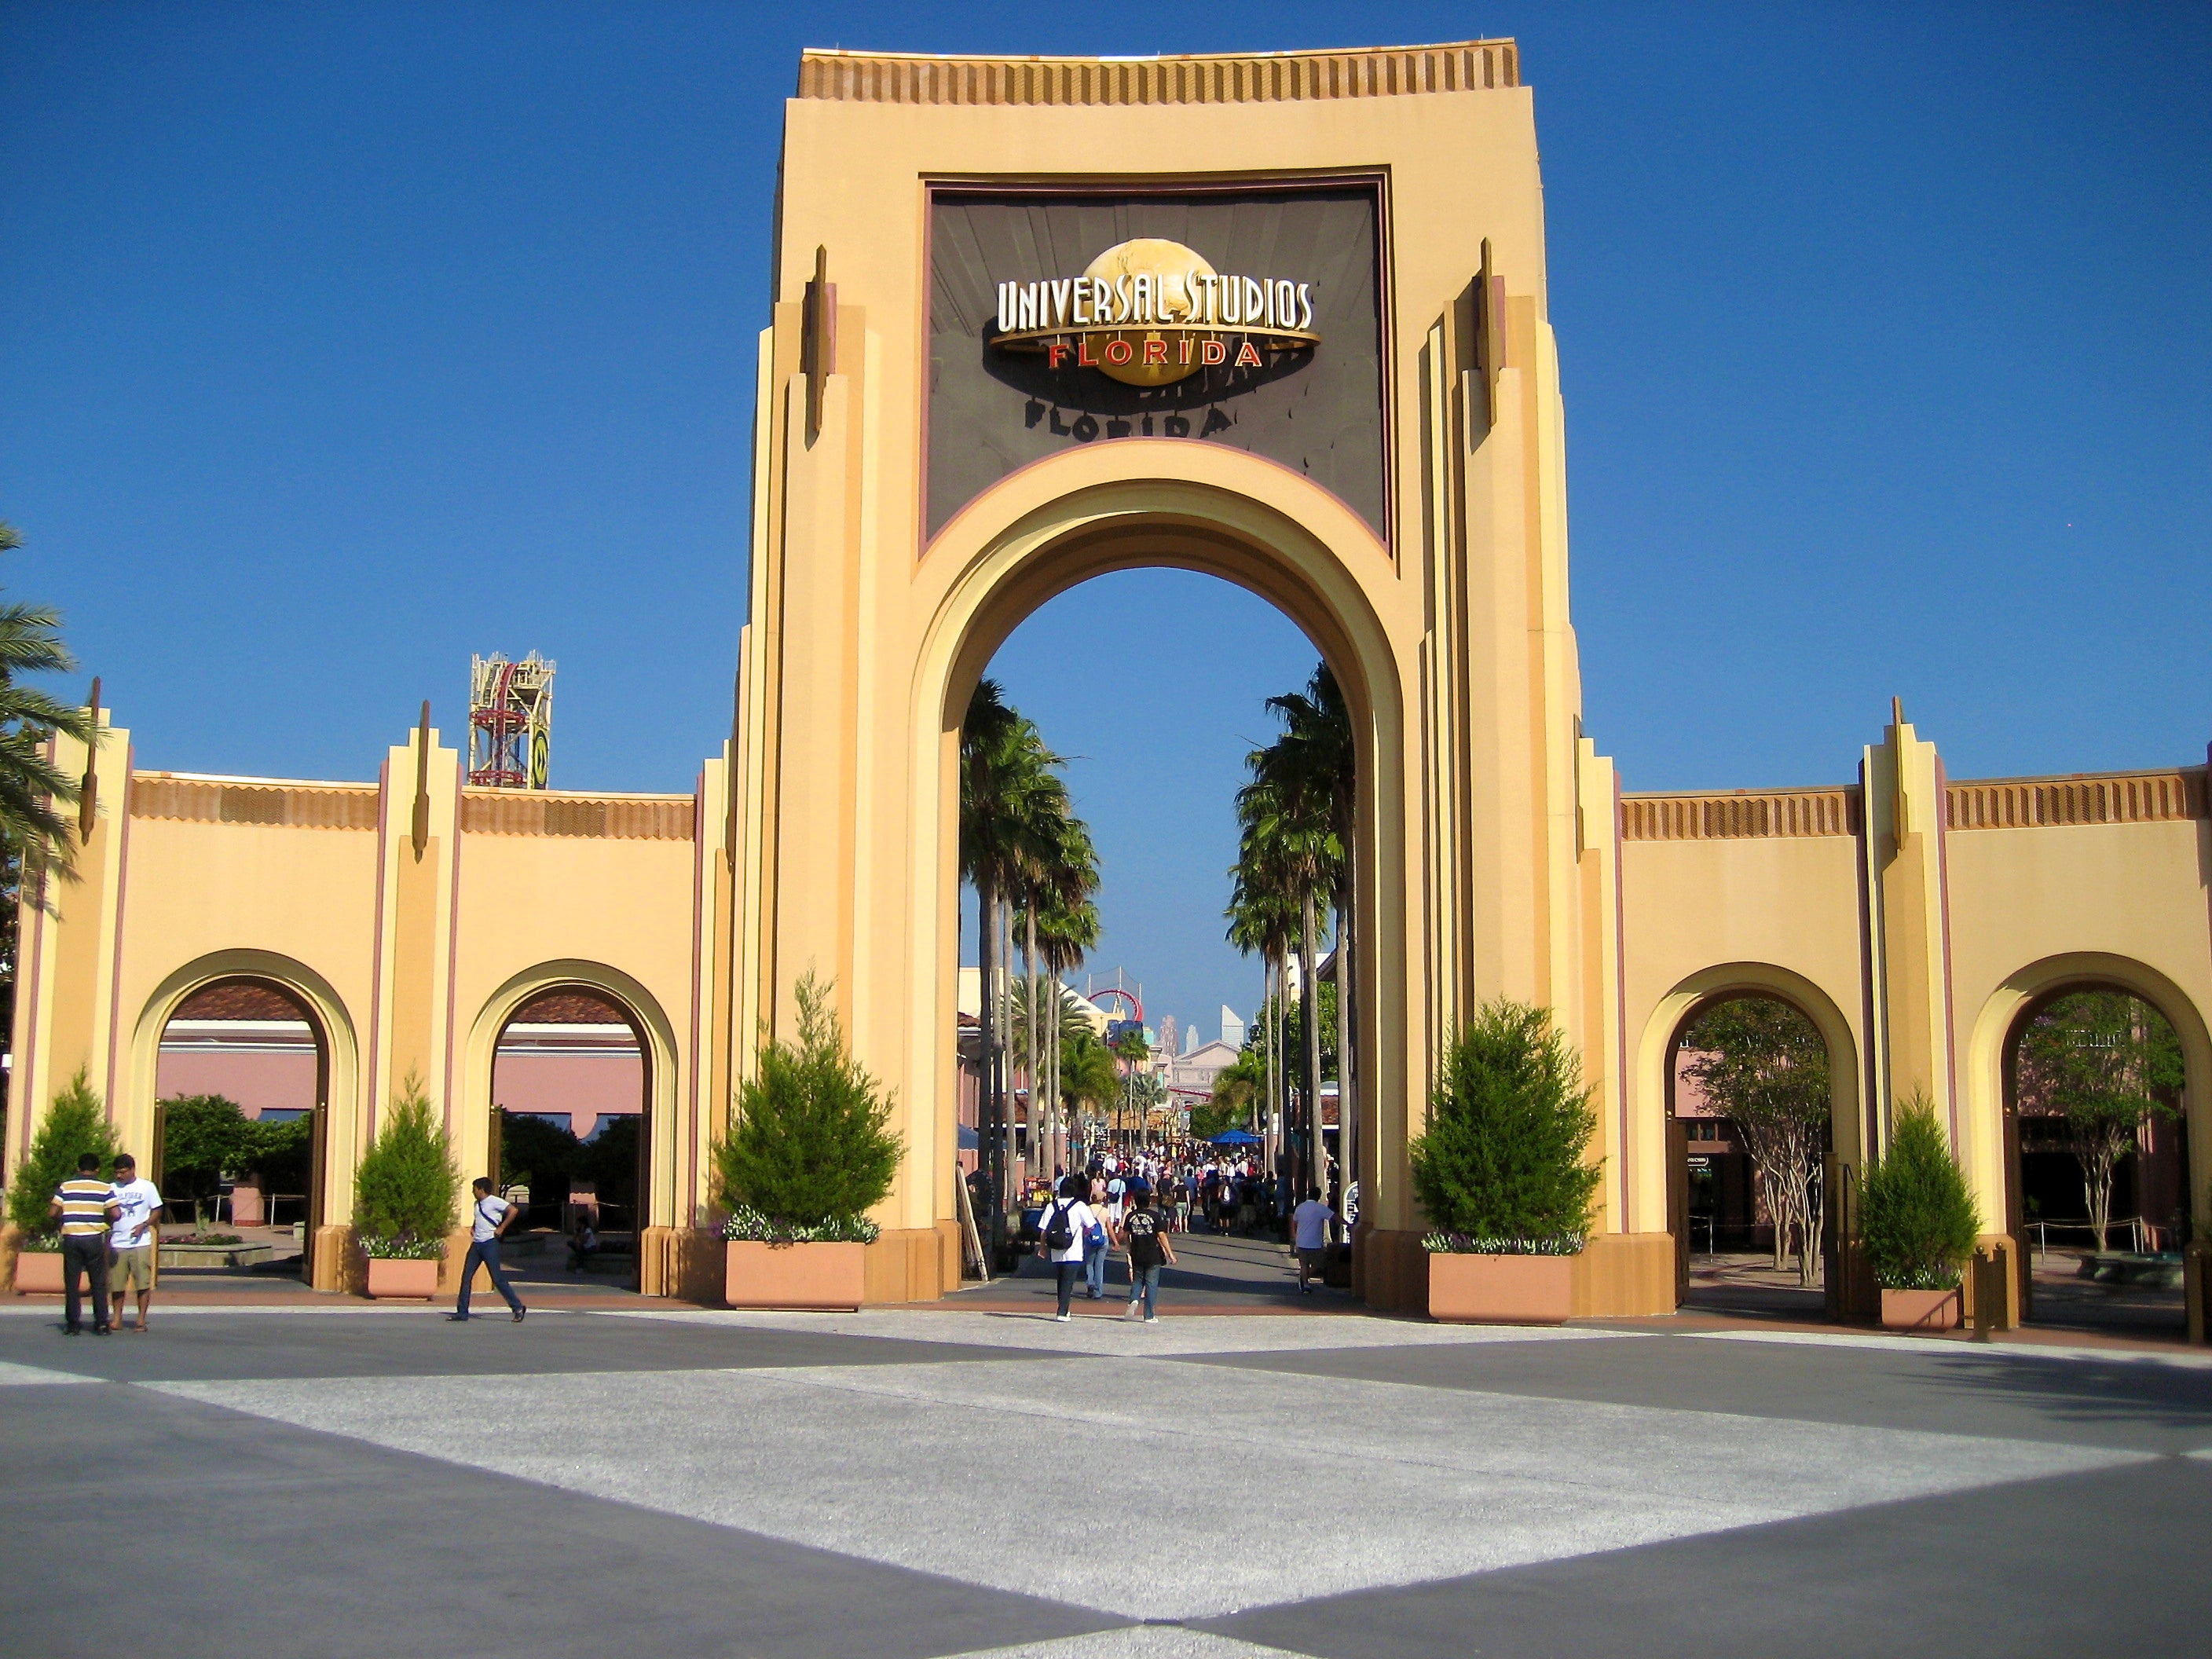 Universal Studios Florida 2022 show schedule & venue information